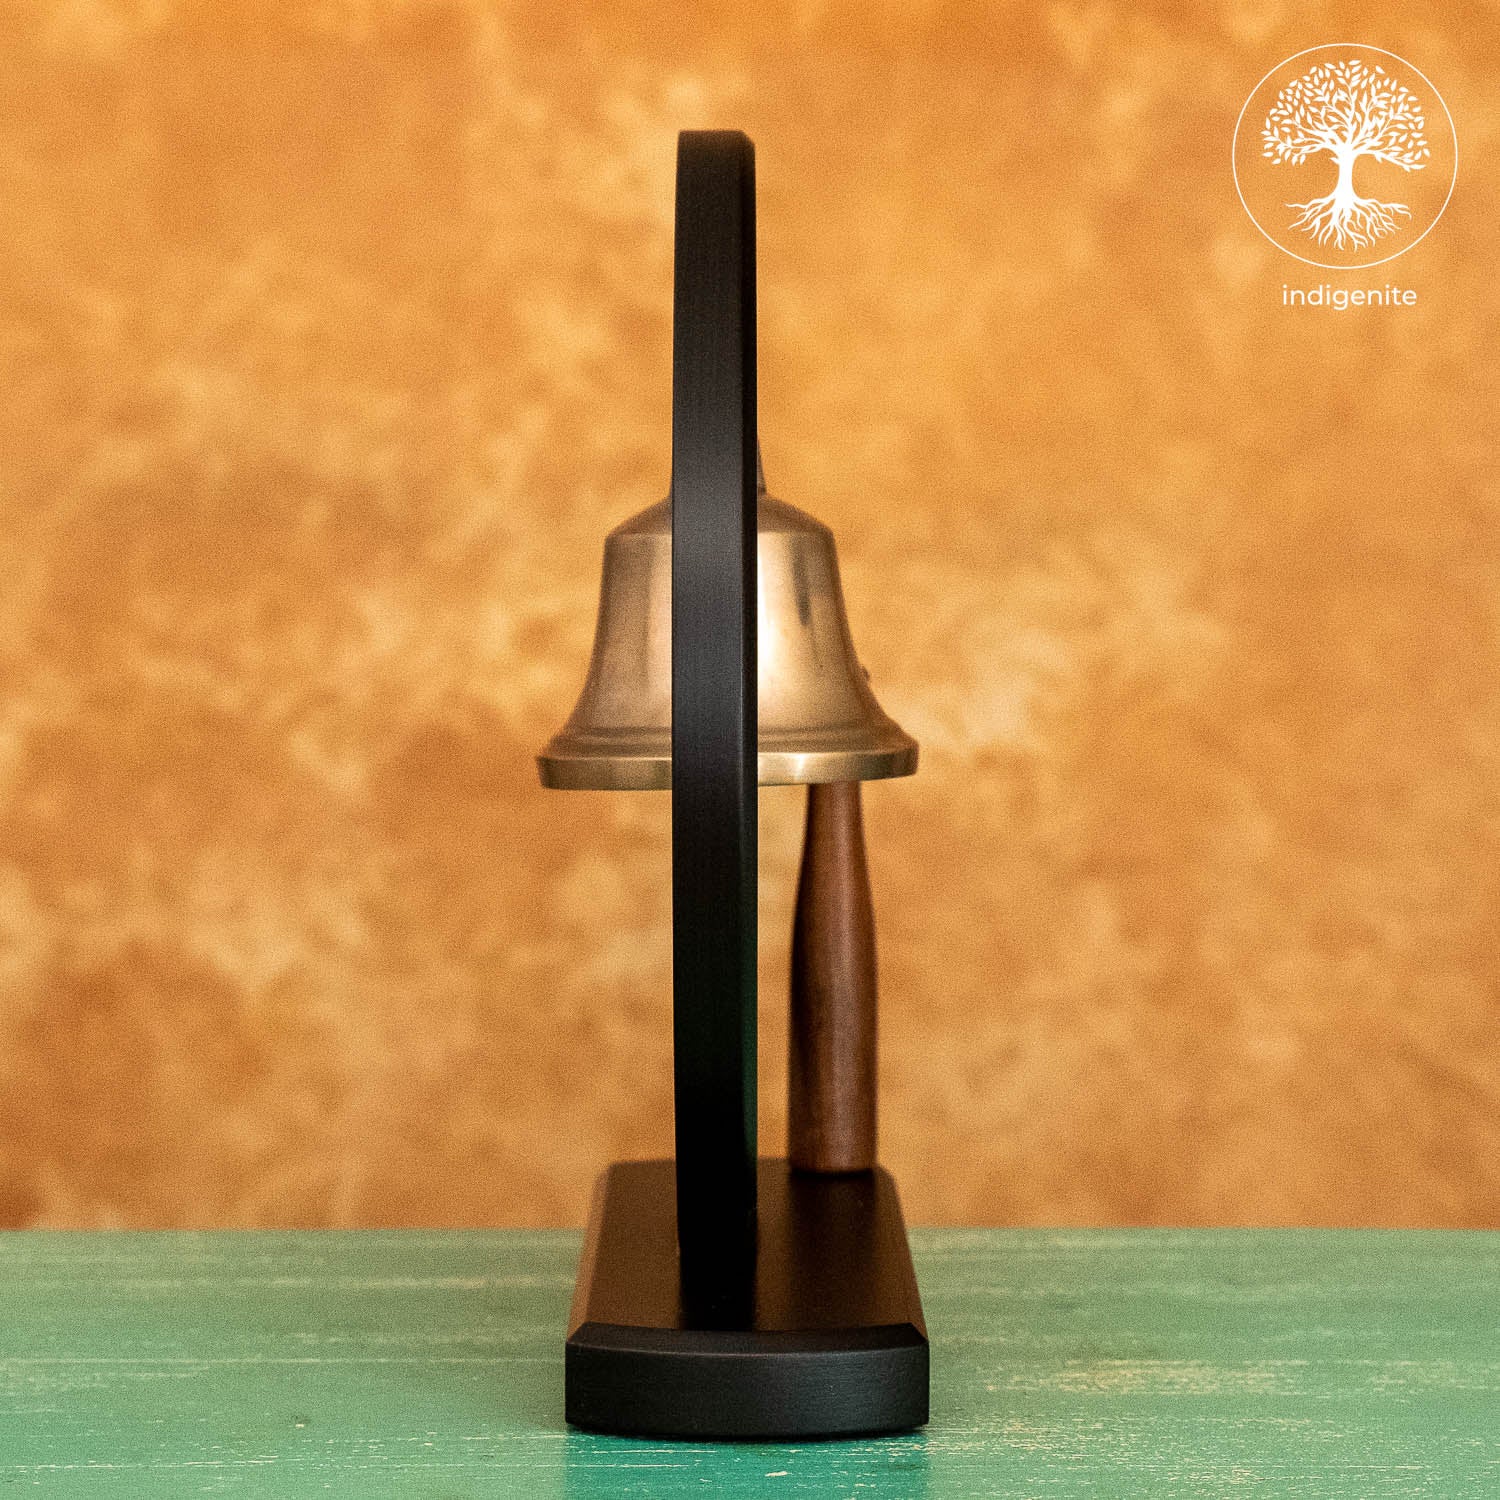 Om Bell in Wooden Base - Brass Decorative